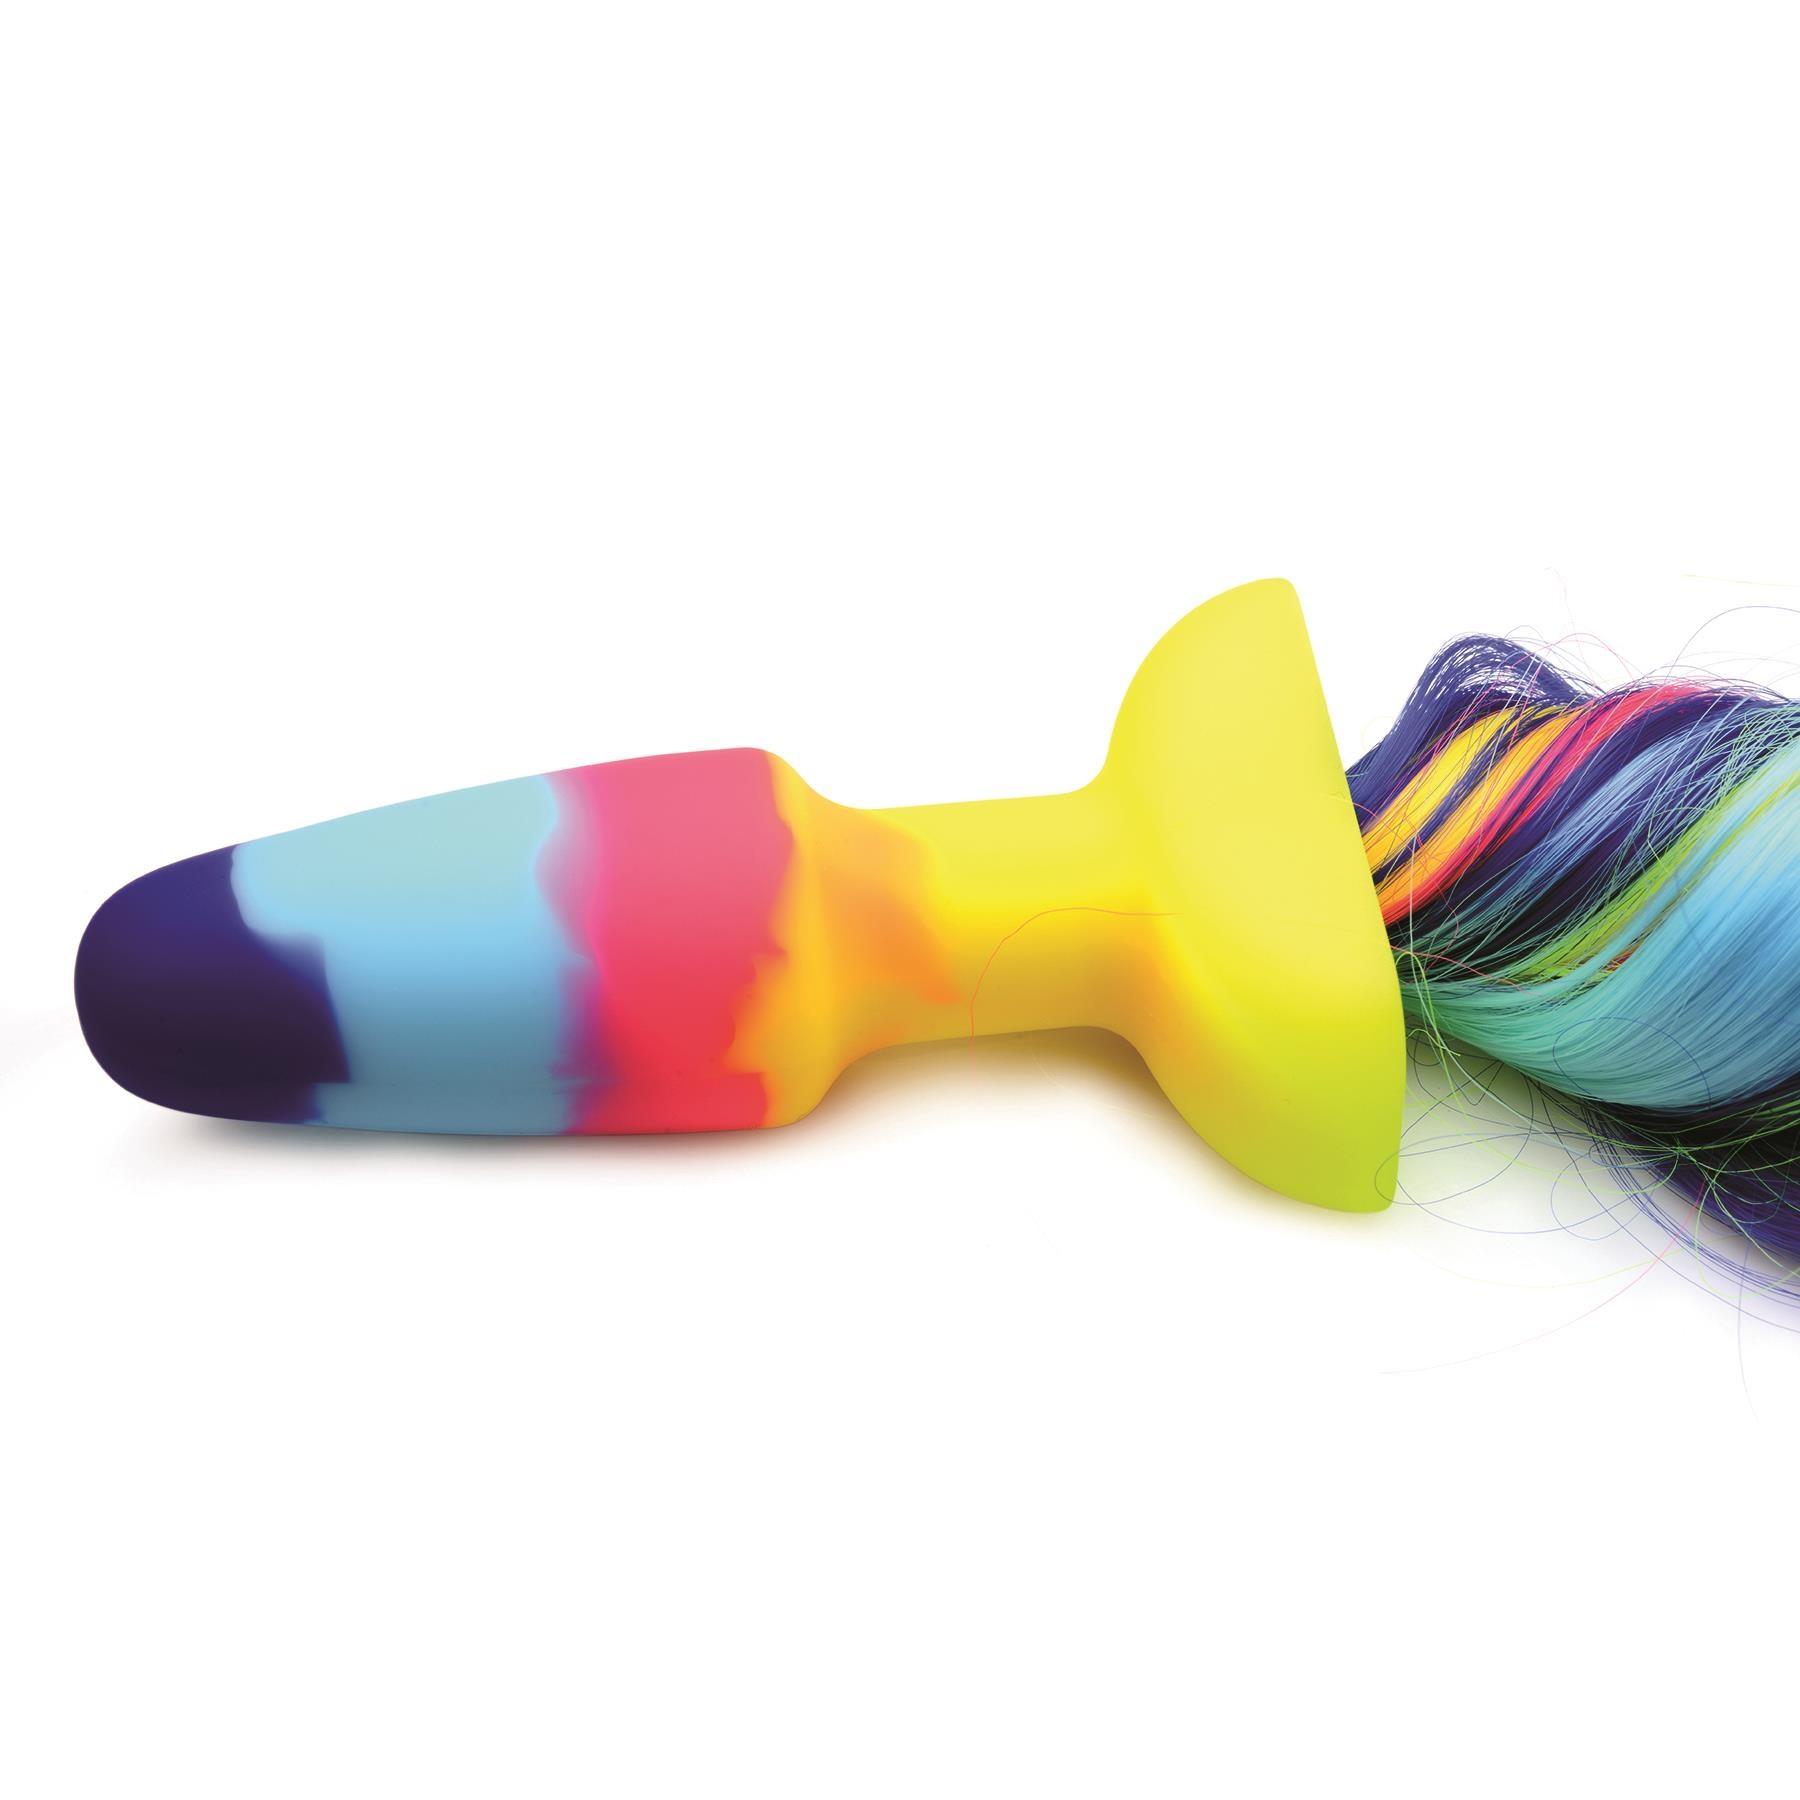 Rainbow Unicorn Tail Anal Plug - Product Shot #7 - Close Up On Plug